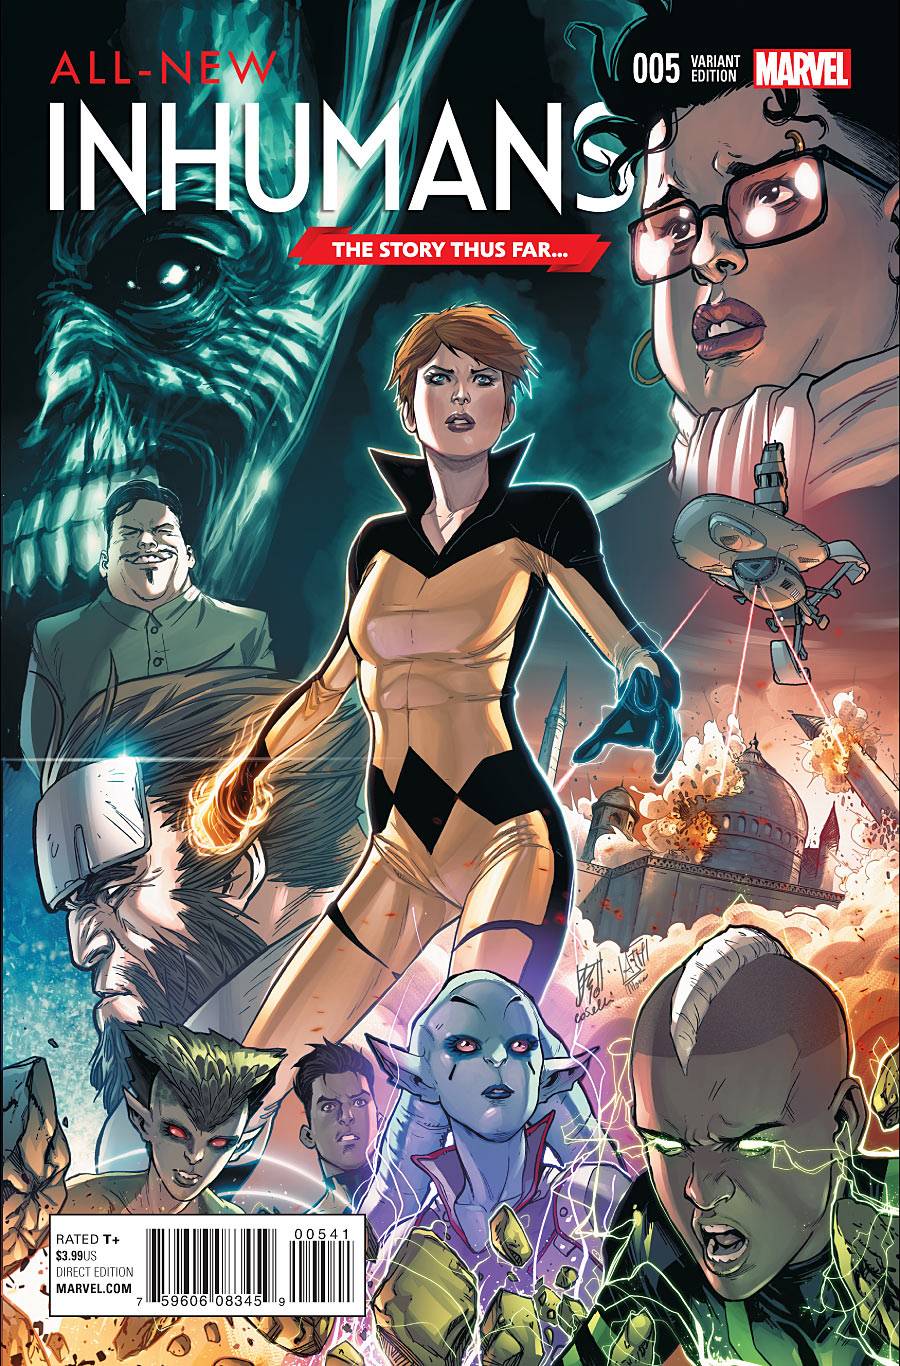 All-New Inhumans #5 (Artist Story Thus Far Variant) (2015)